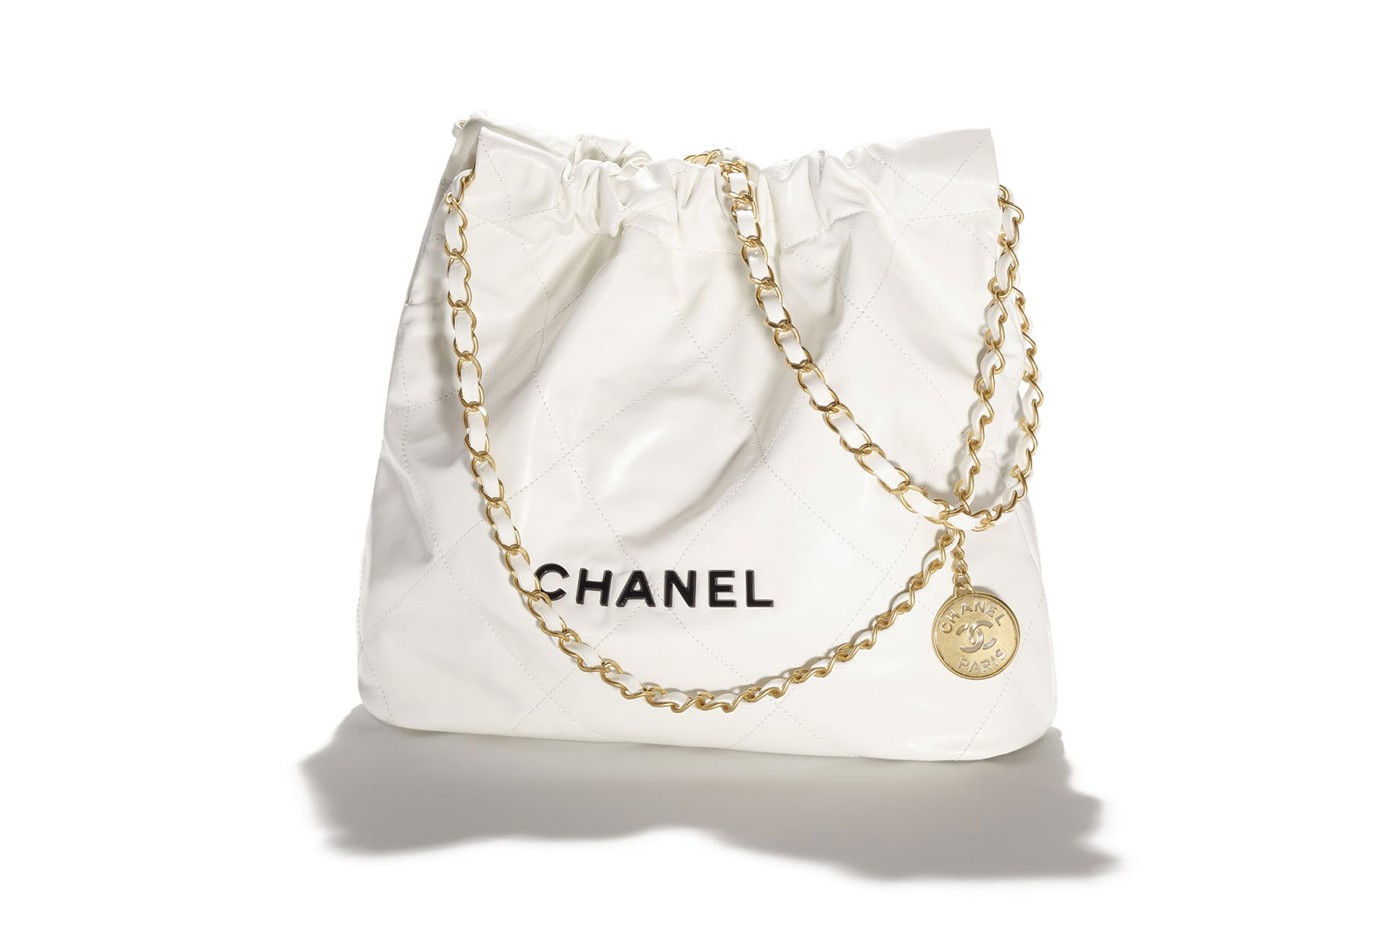 Виржини Виар представила новую сумку Chanel (фото 5)